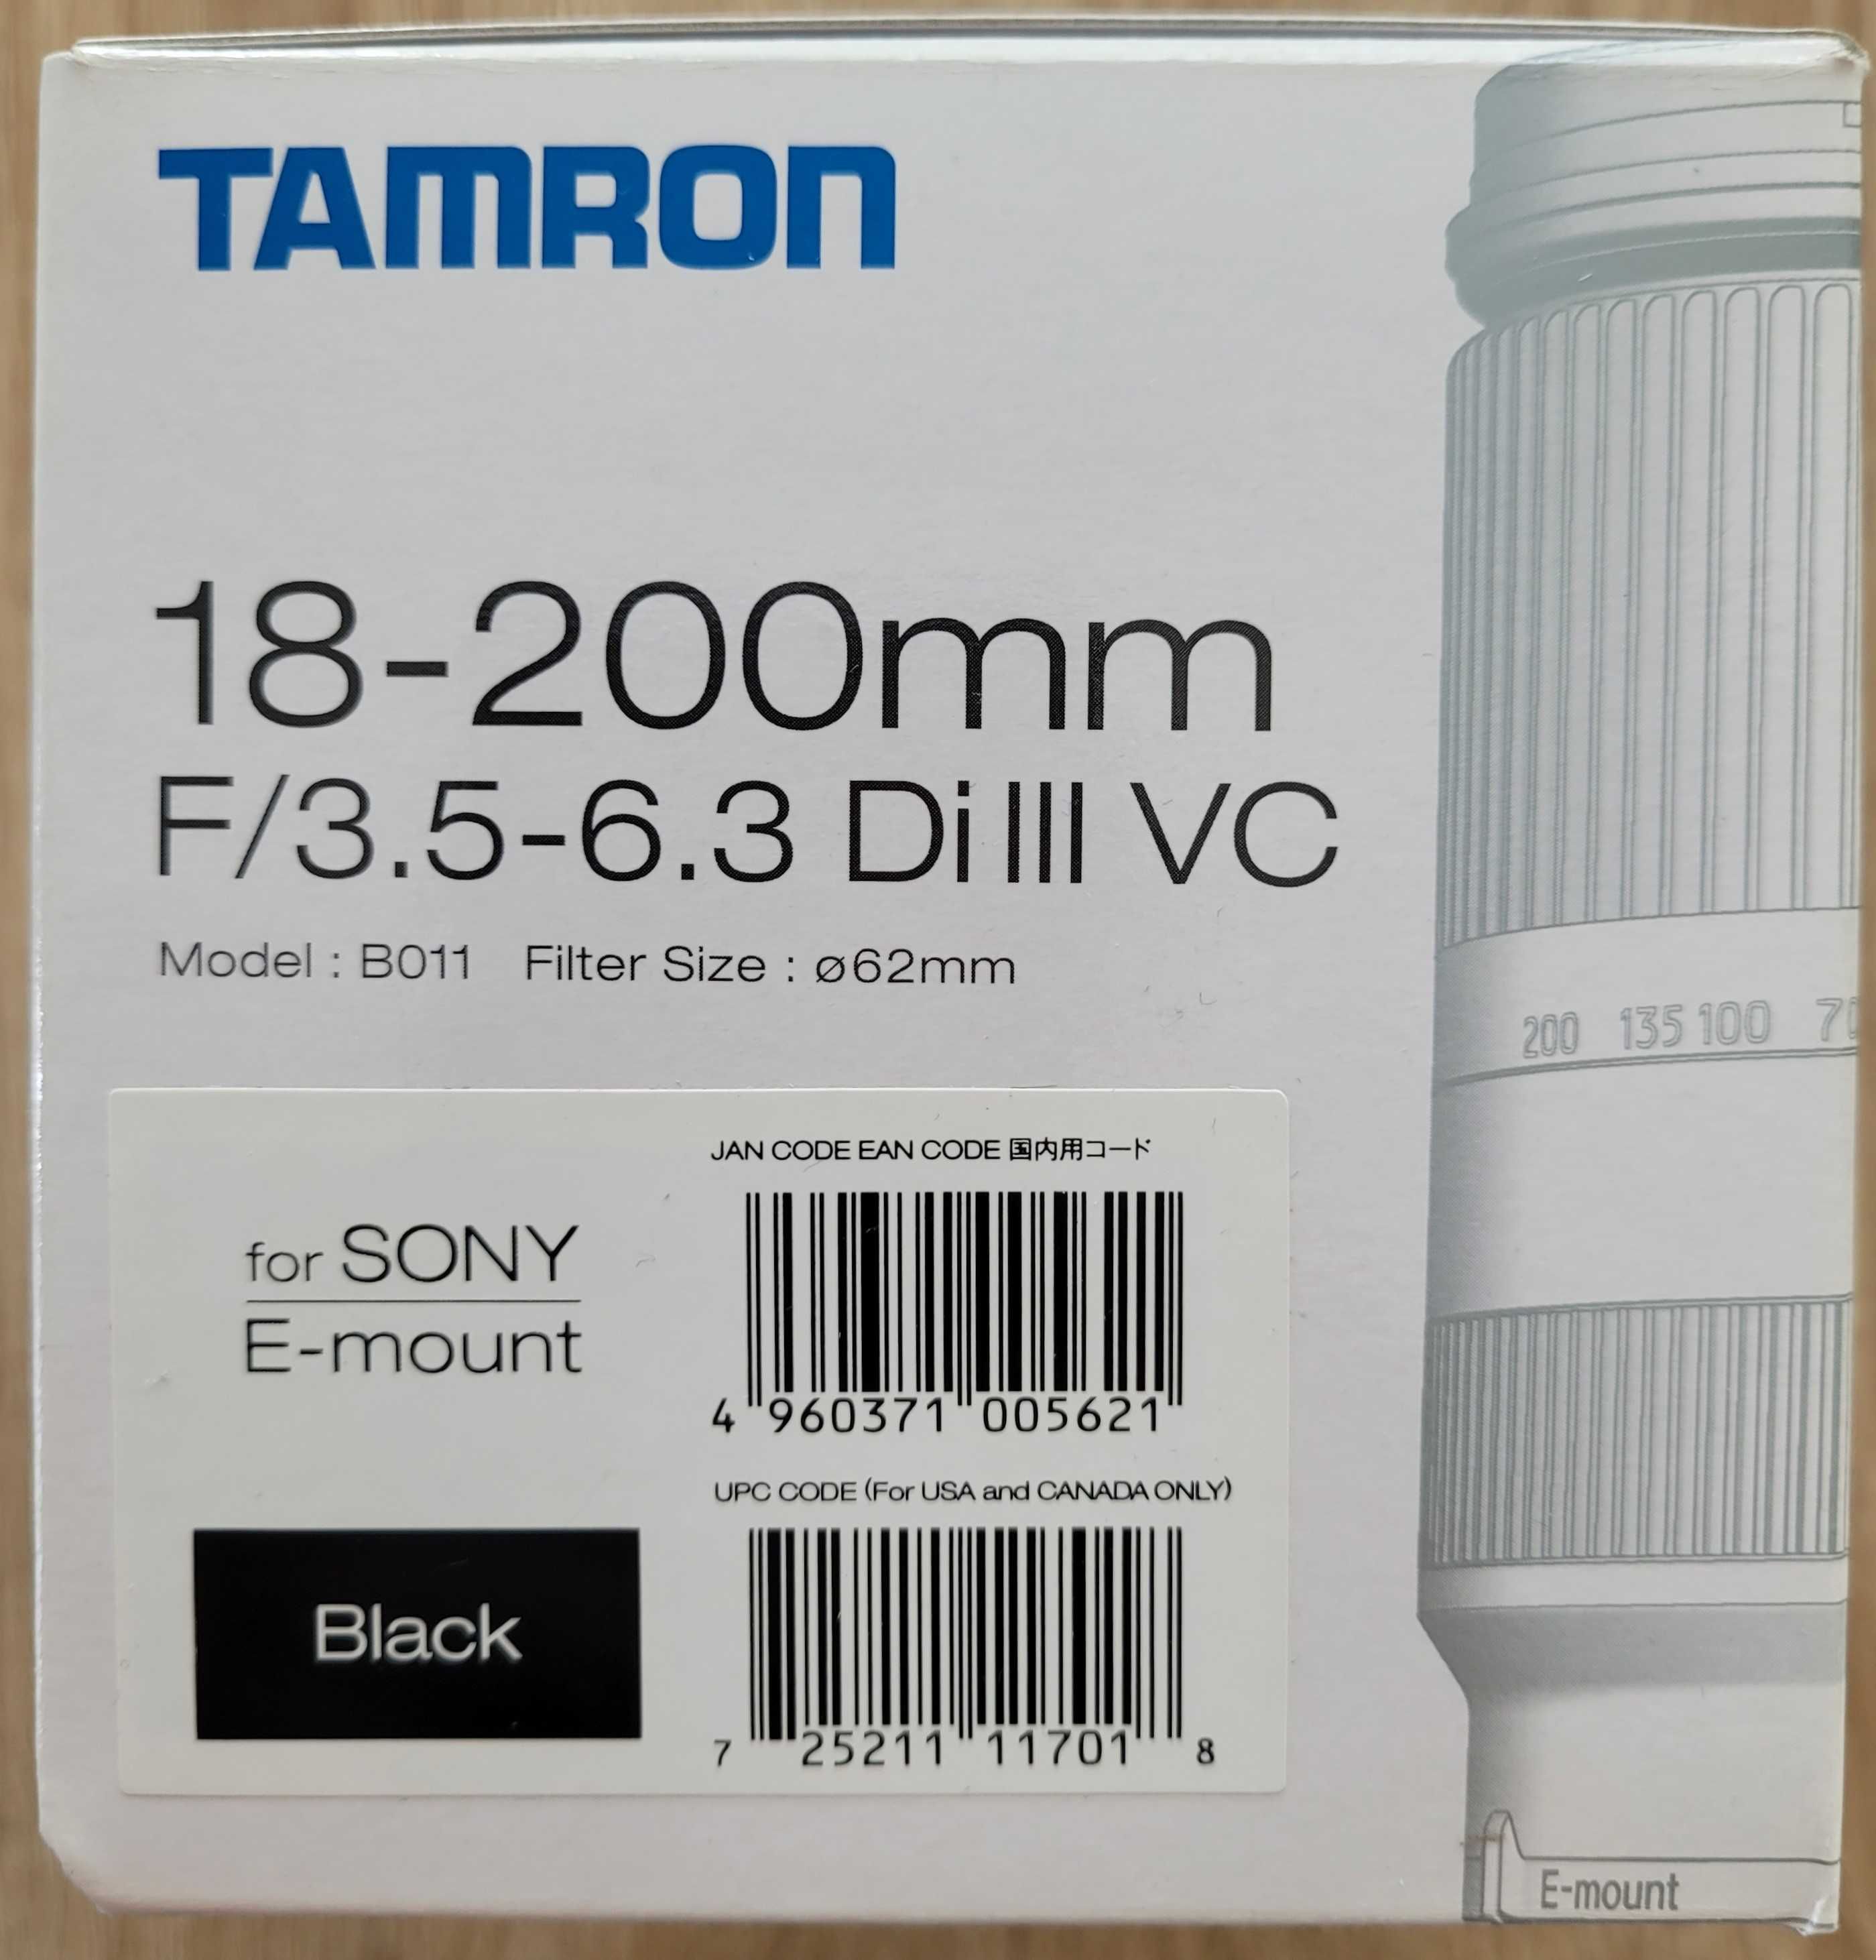 Obiektyw Tamron 18-200mm f/3.5-6.3 Di III VC B011